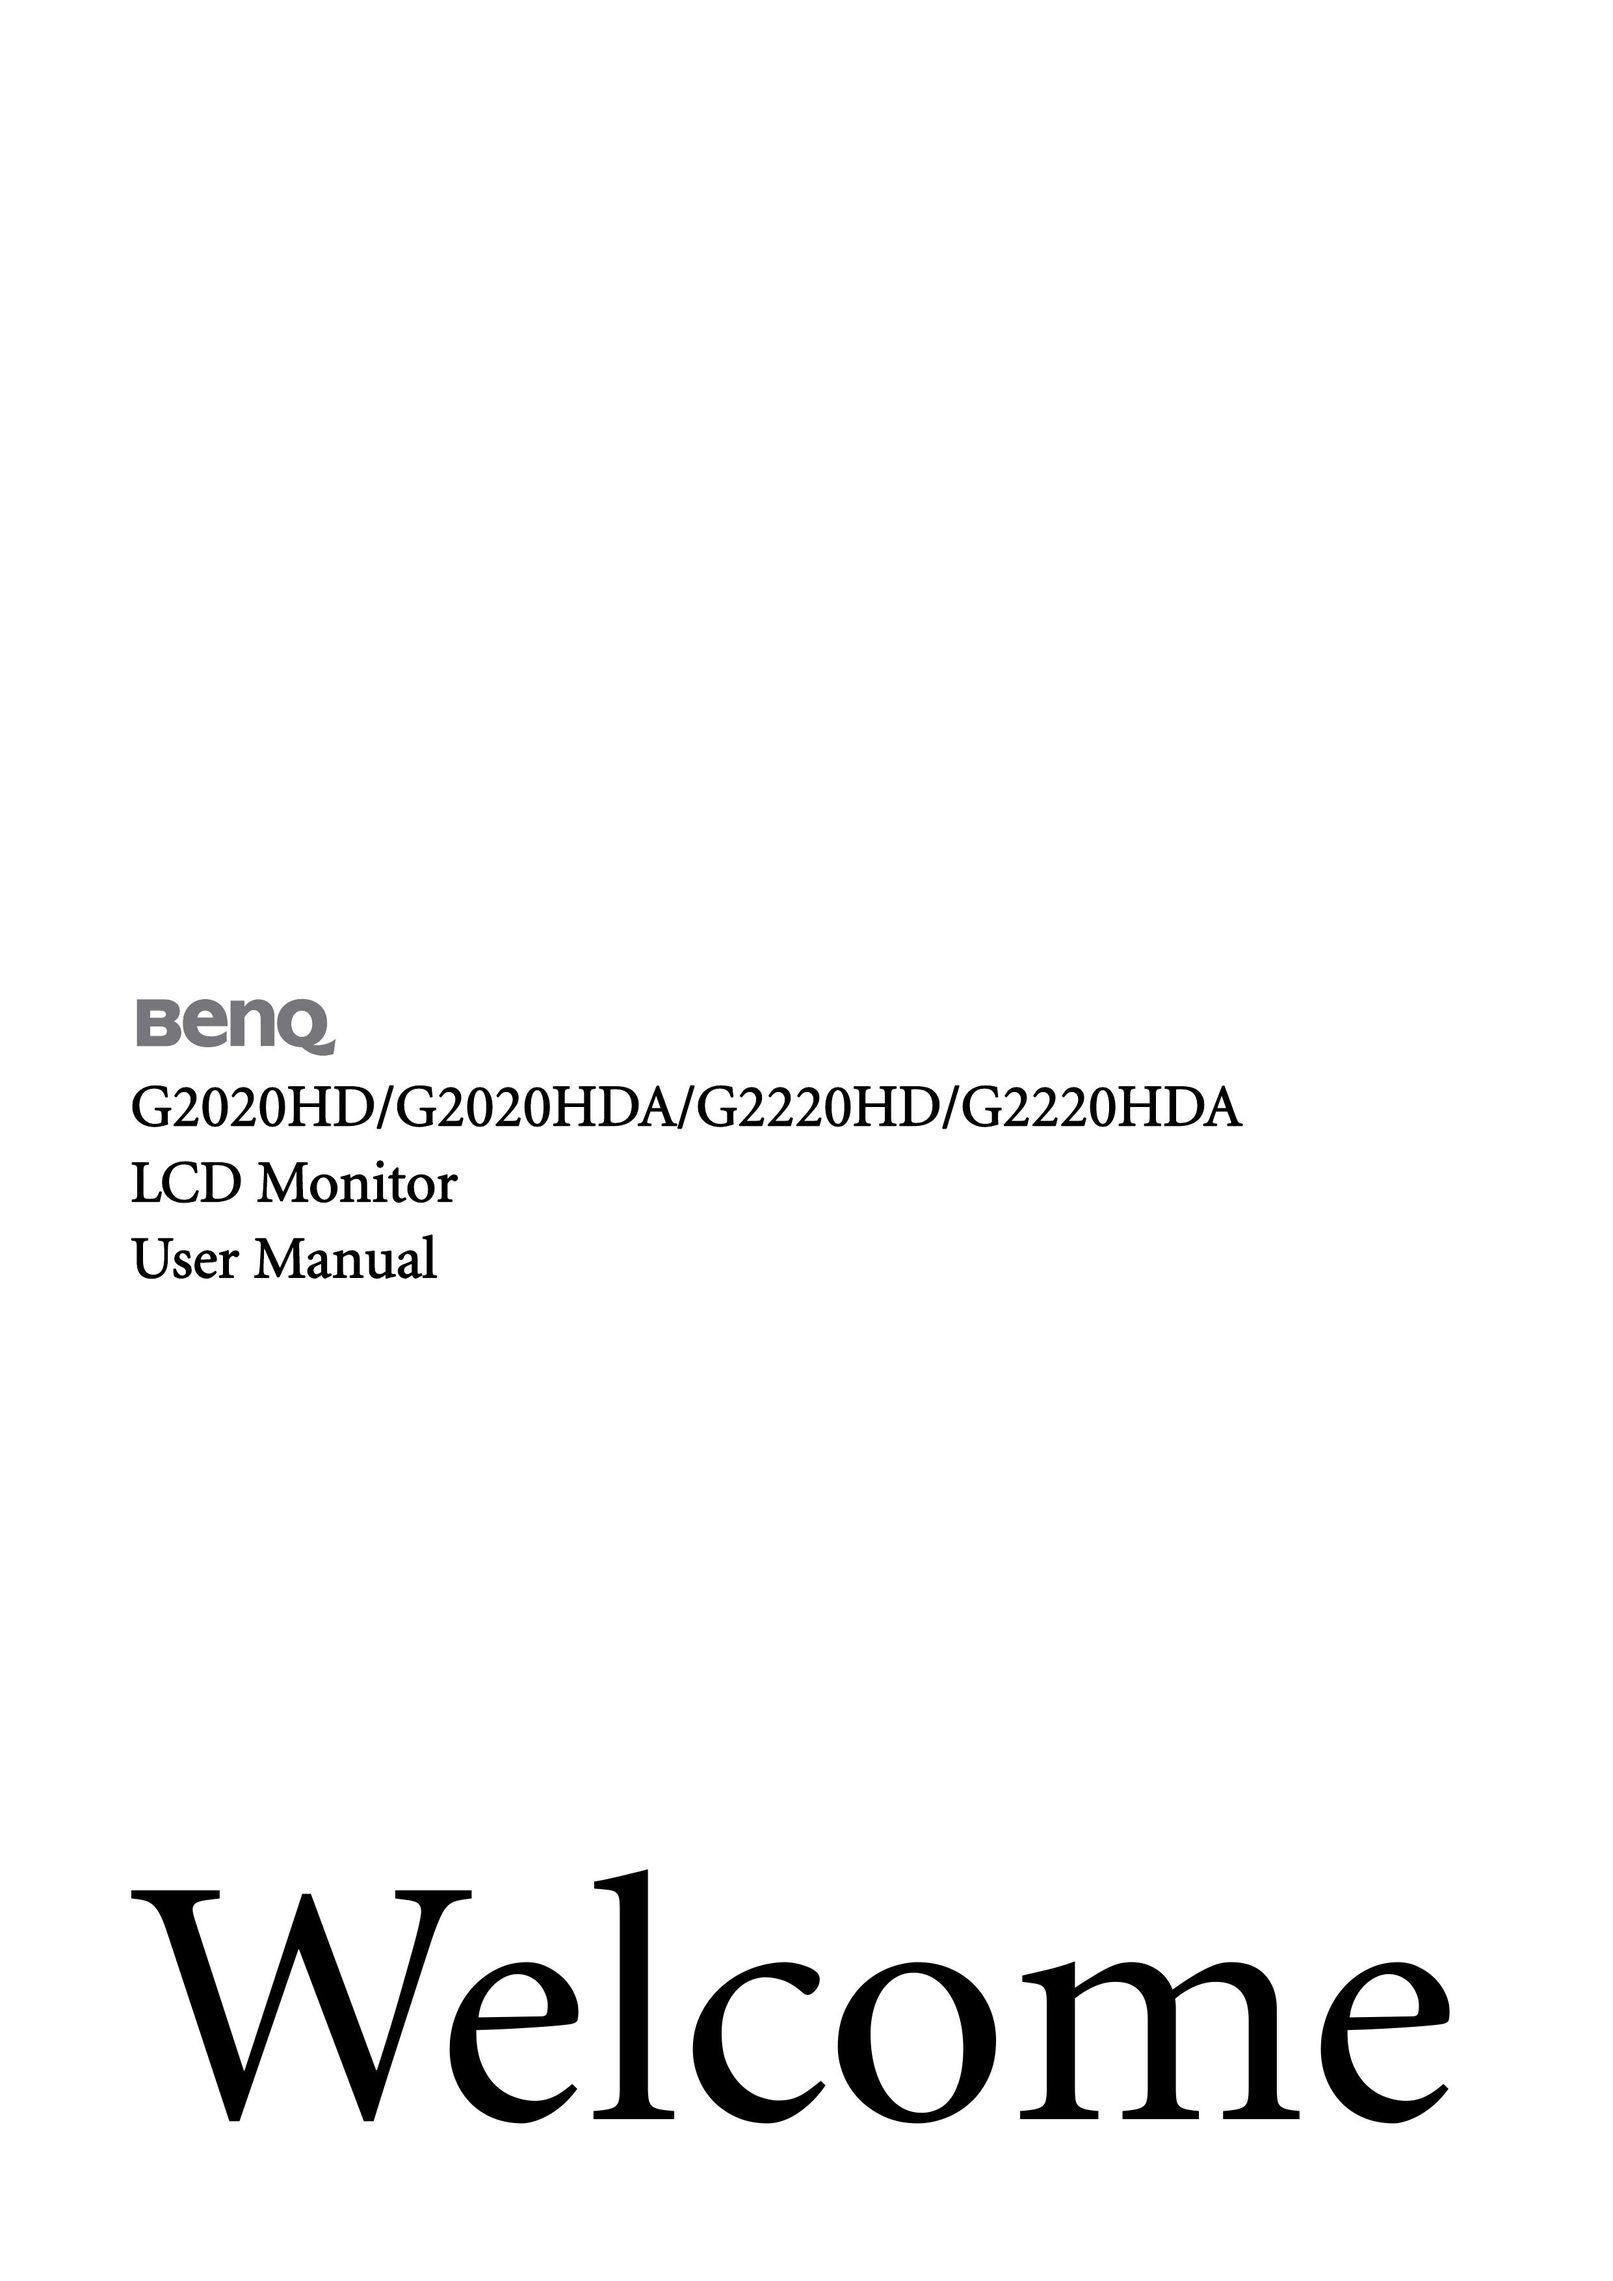 BenQ G2220HD Computer Monitor User Manual